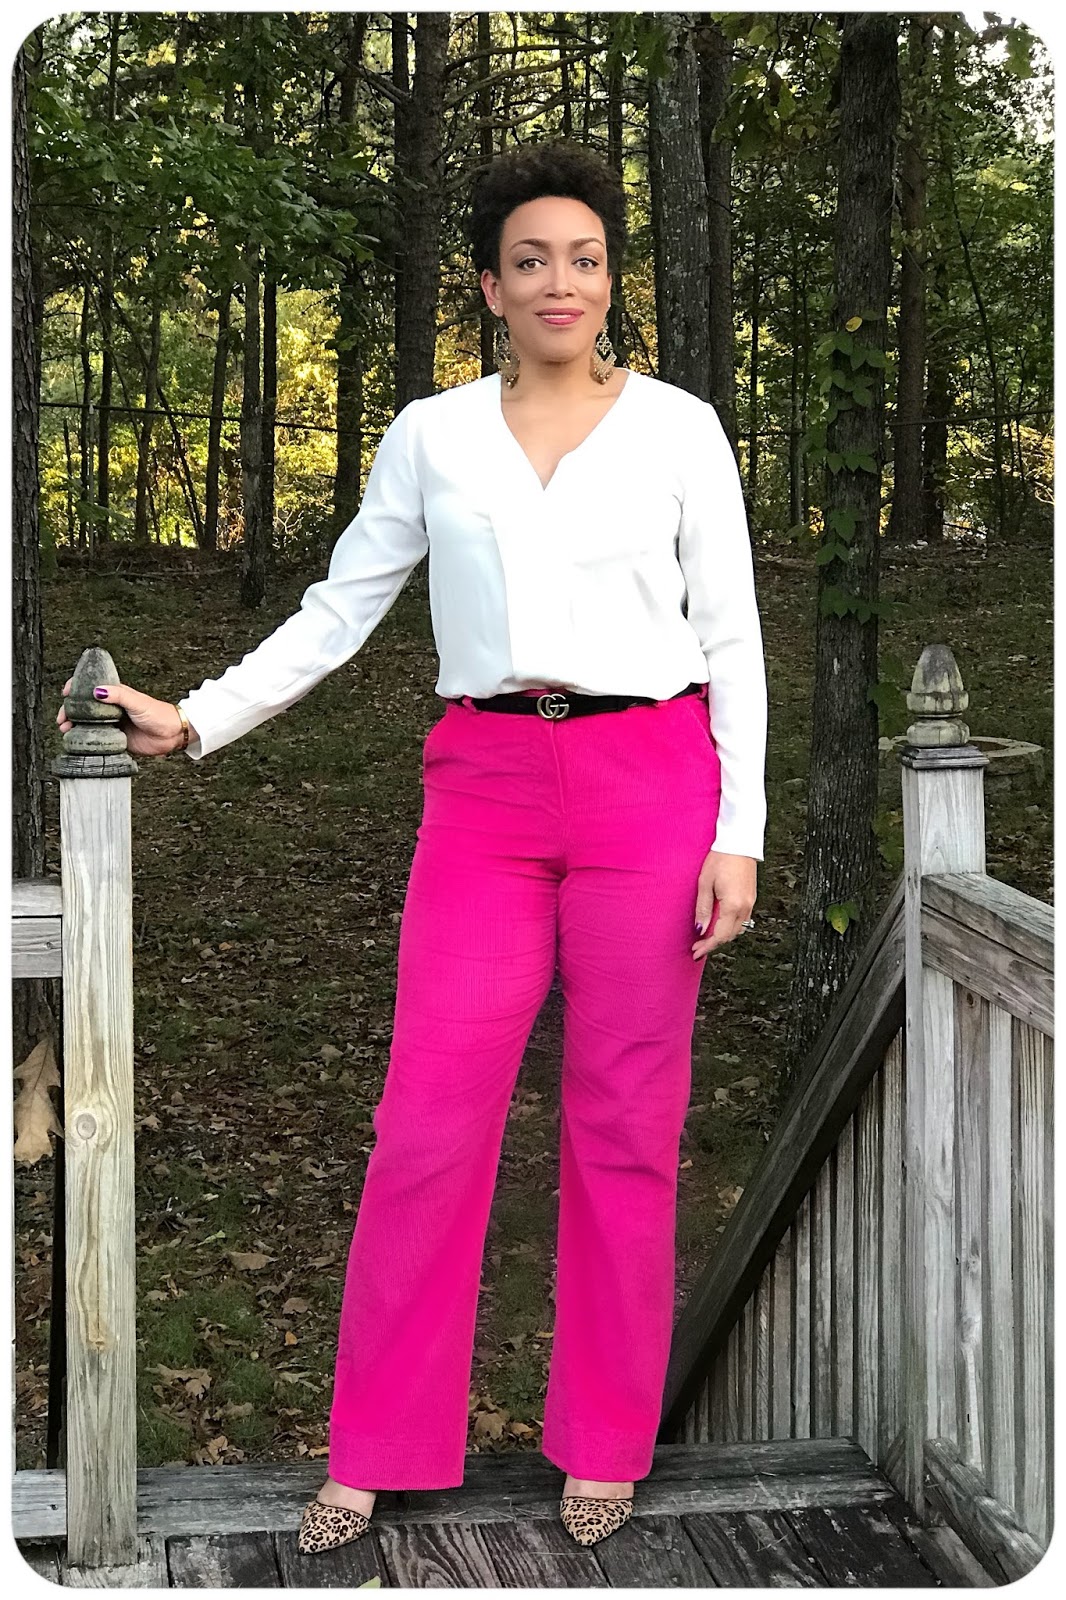 Vogue 9181 | Hot Pink Corduroy Pants - Erica Bunker DIY Style!